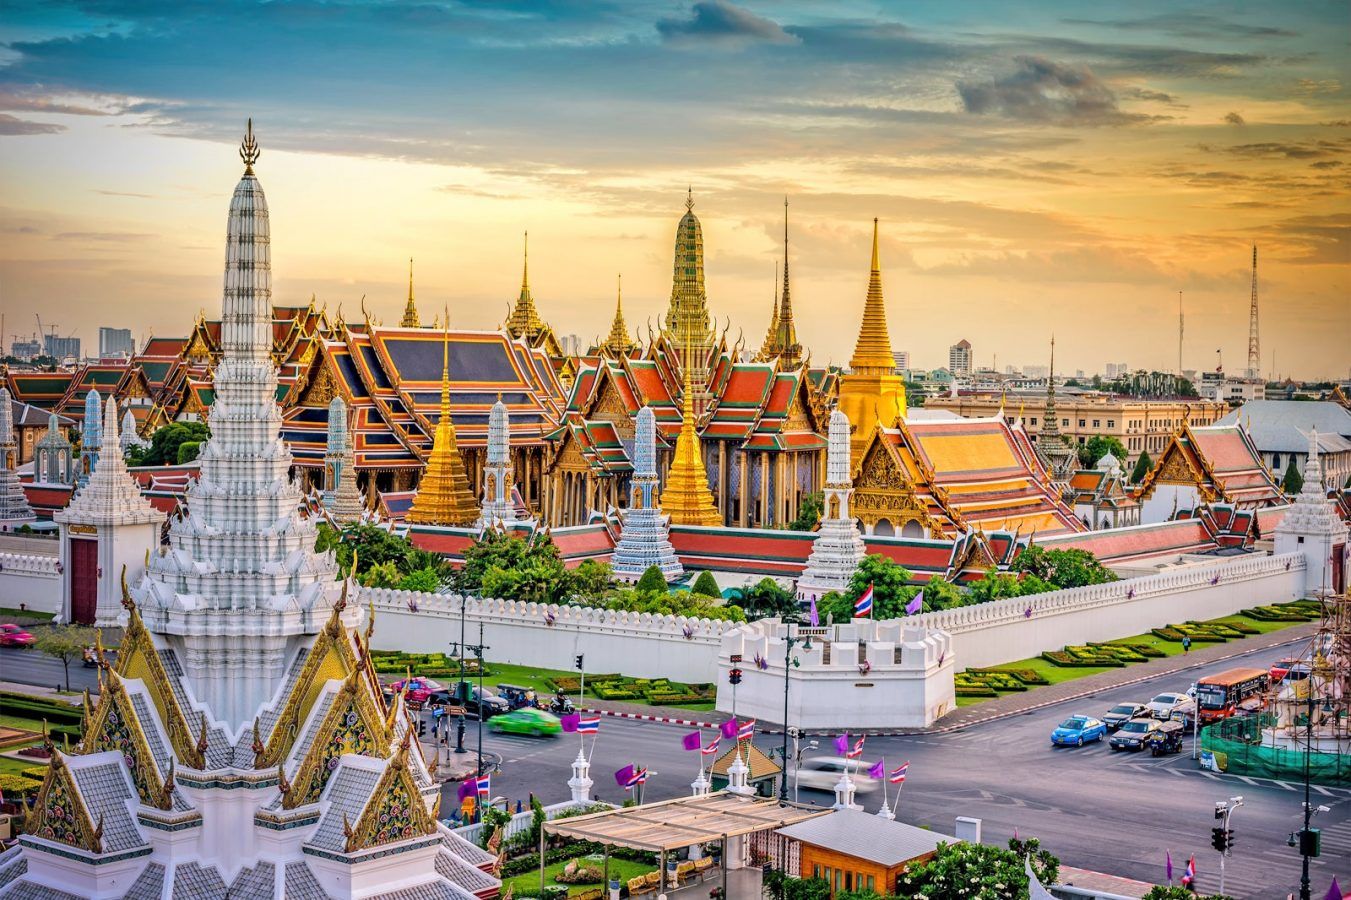 Bangkok Voted Best City, Phuket Best Island in Asia’s Best Awards 2022 by ‘Travel + Leisure’